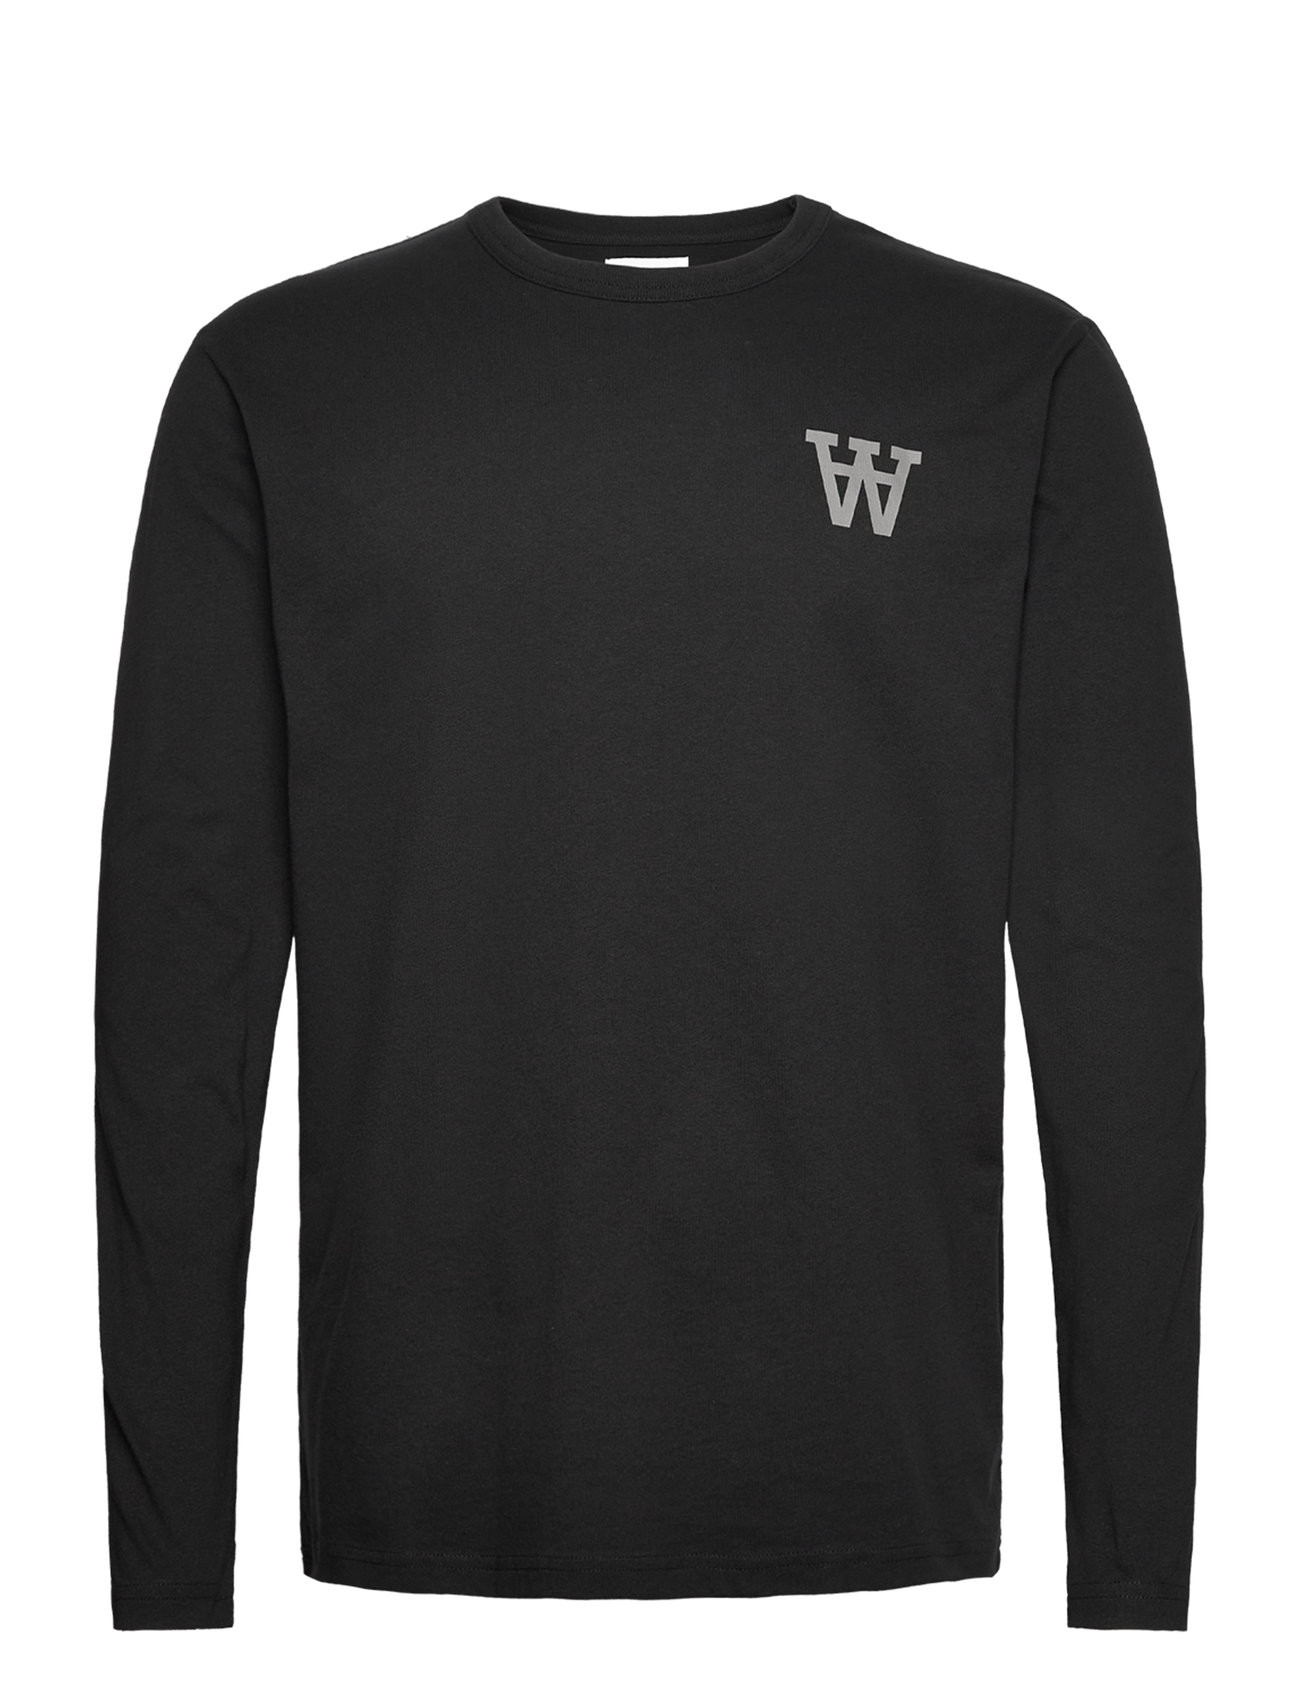 Mel Tirewall Ls T-Shirt Gots Tops T-Langærmet Skjorte Black Double A By Wood Wood